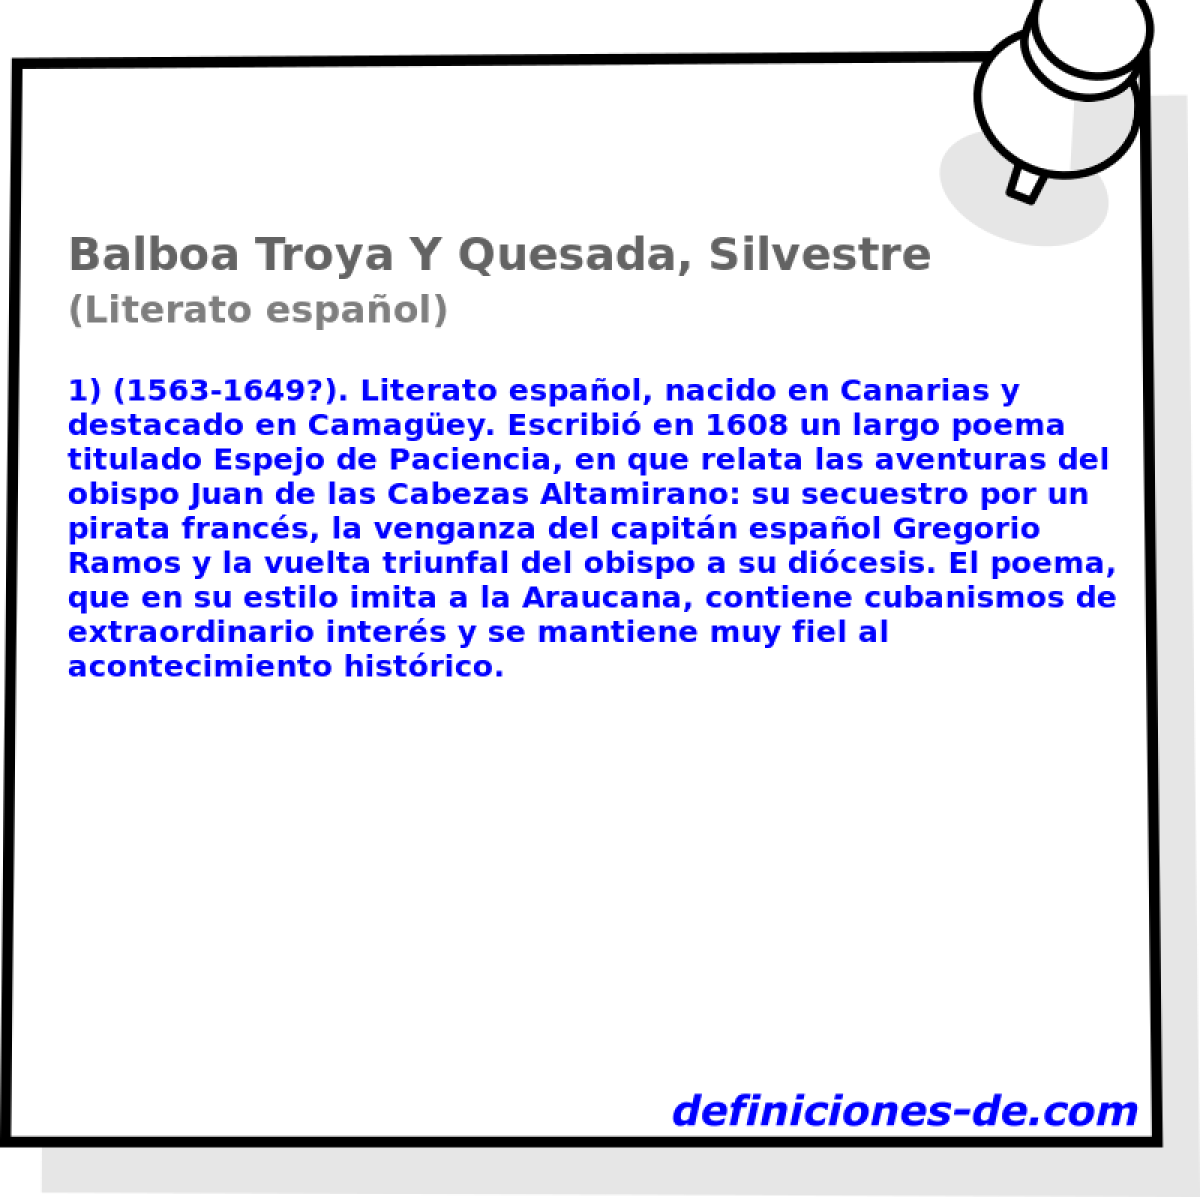 Balboa Troya Y Quesada, Silvestre (Literato espaol)